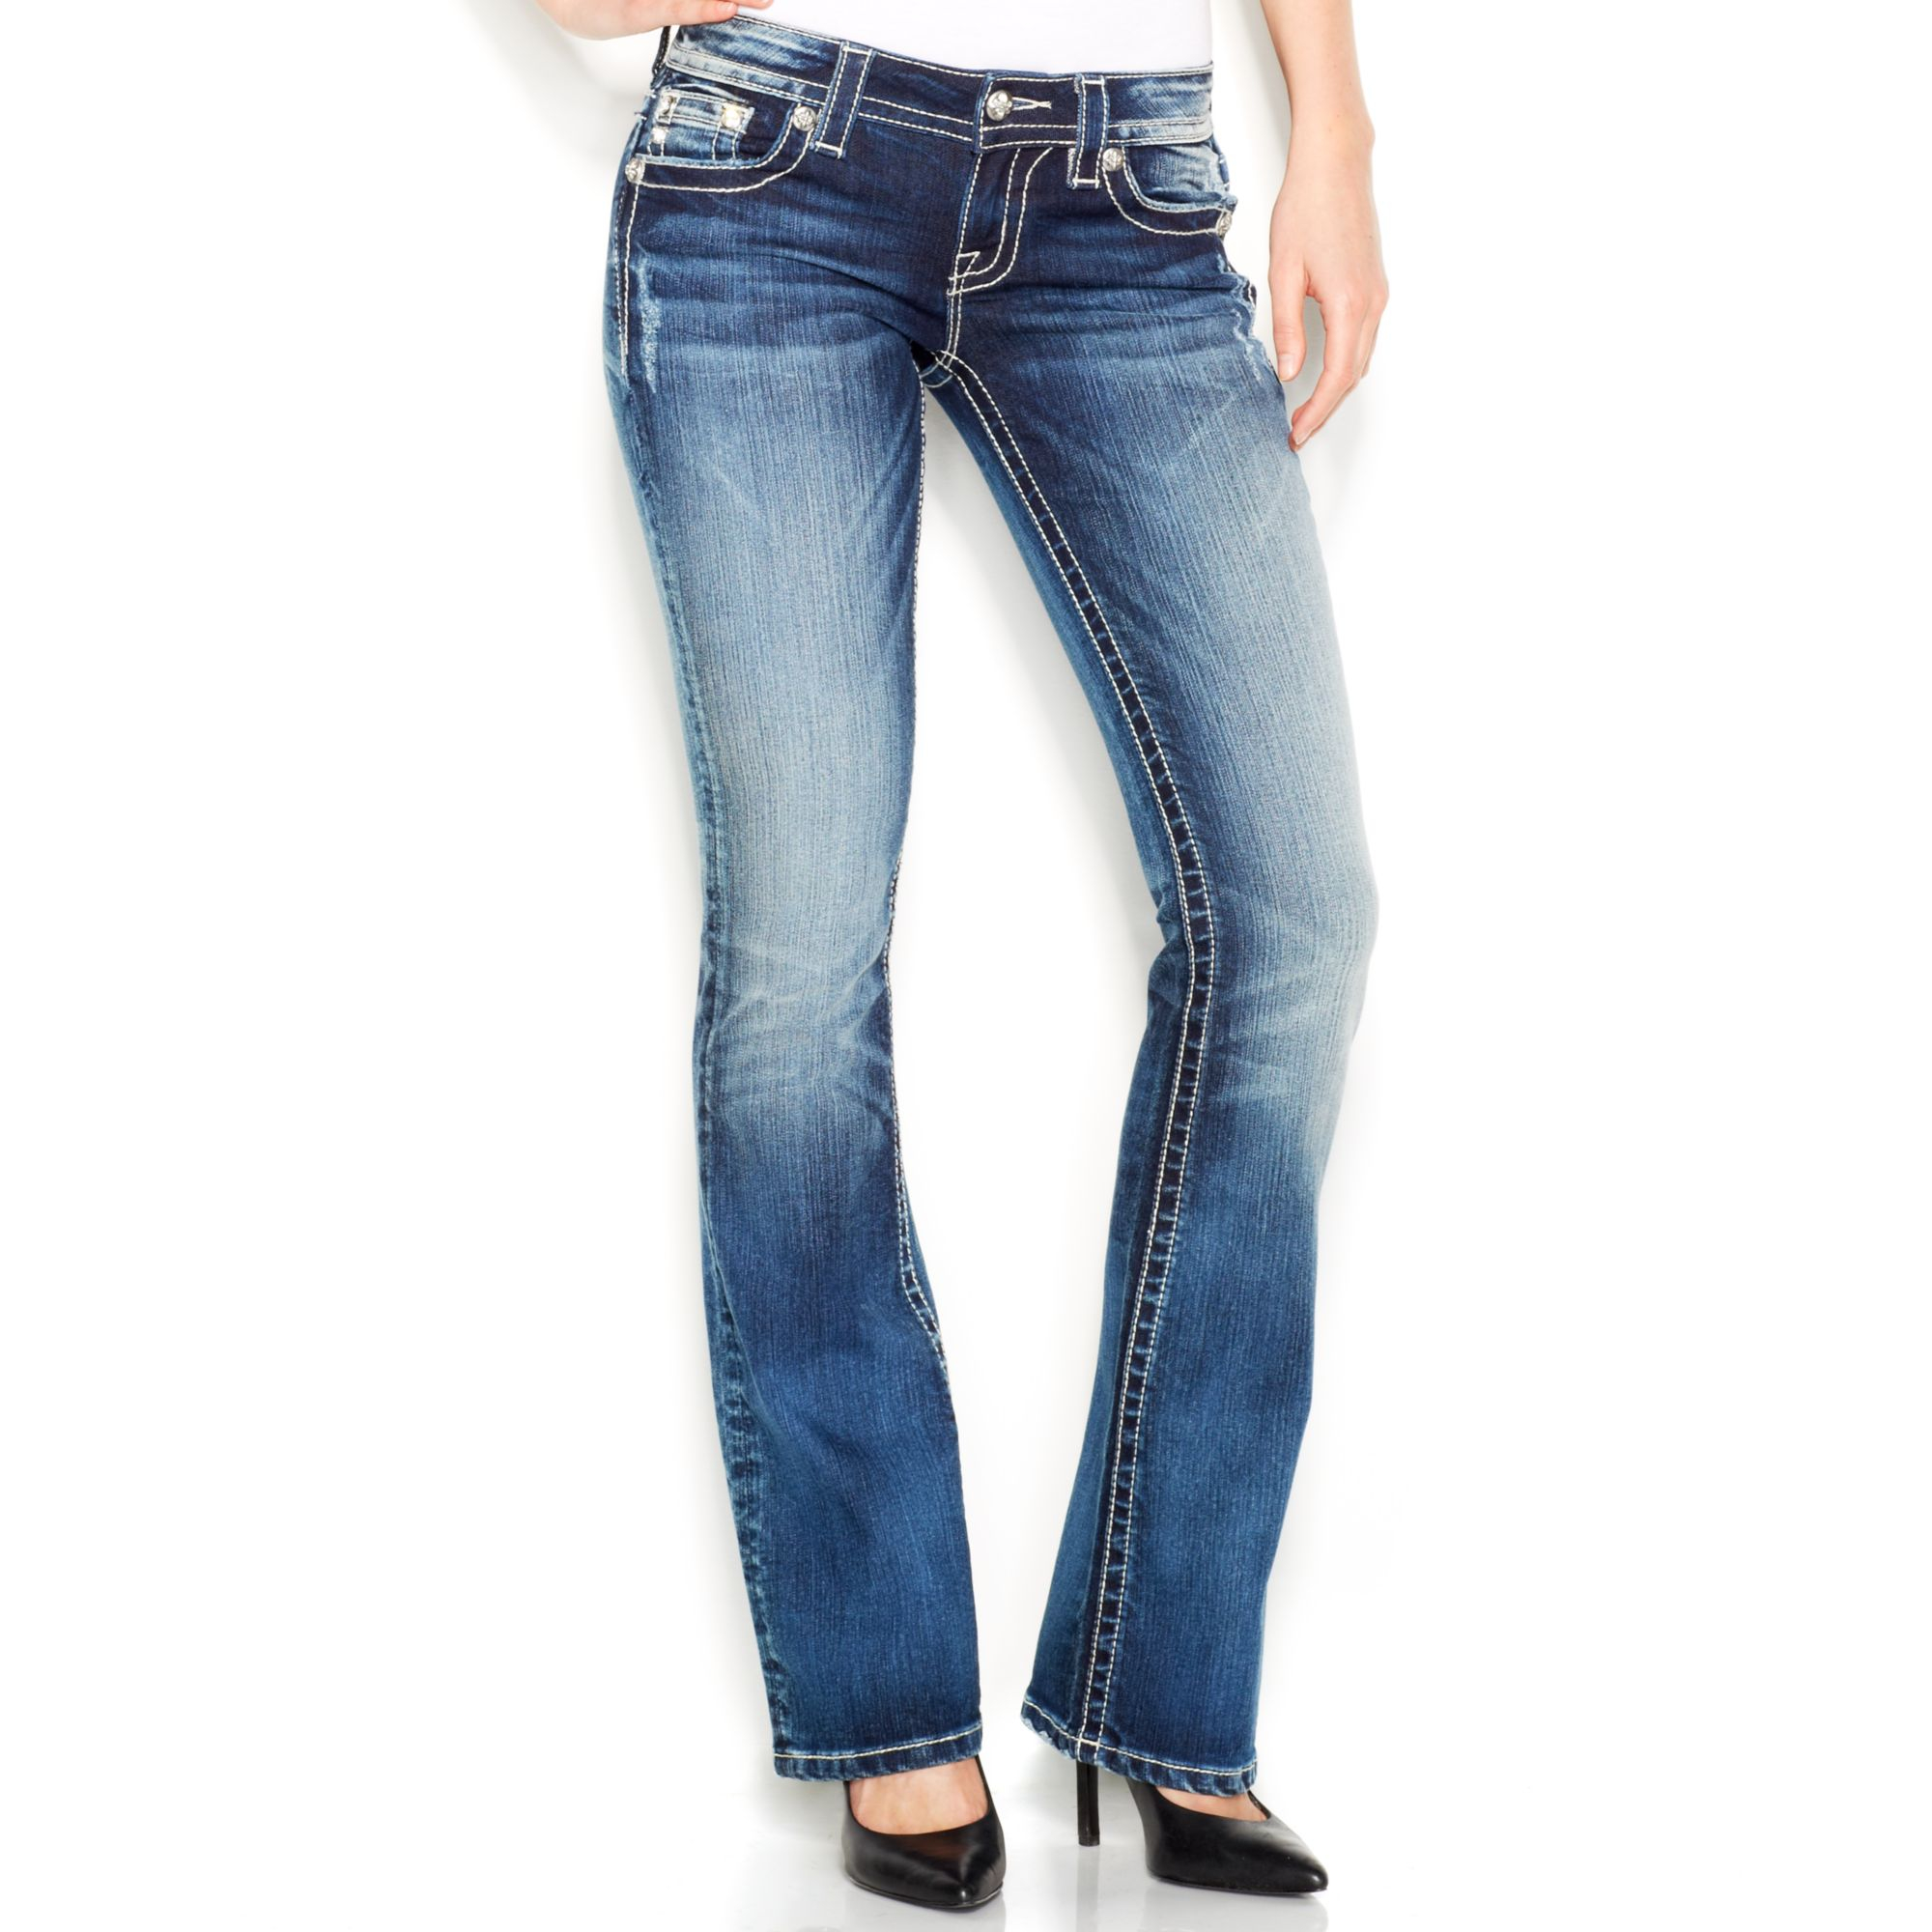 rhinestone studded womens jeans